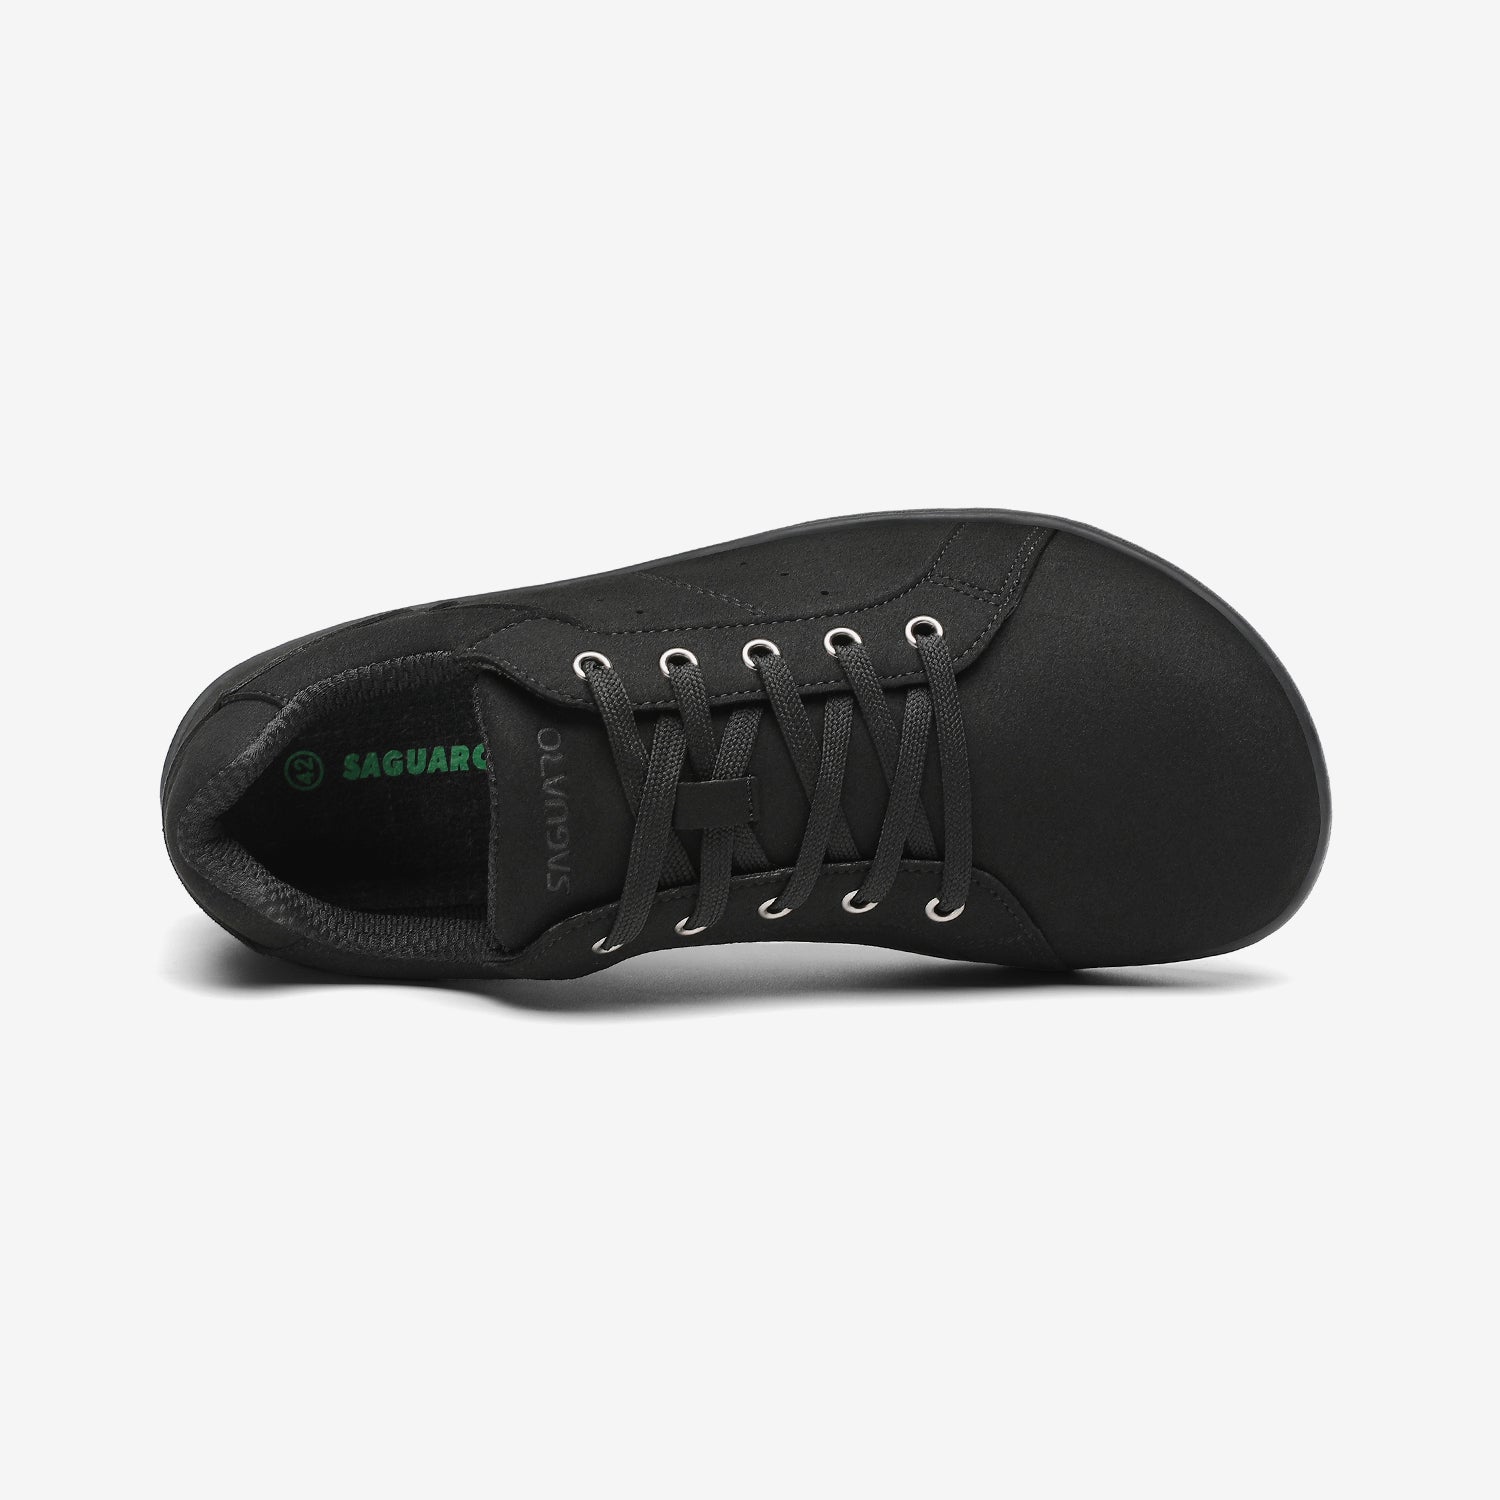 Stellar I - Barefoot Shoes